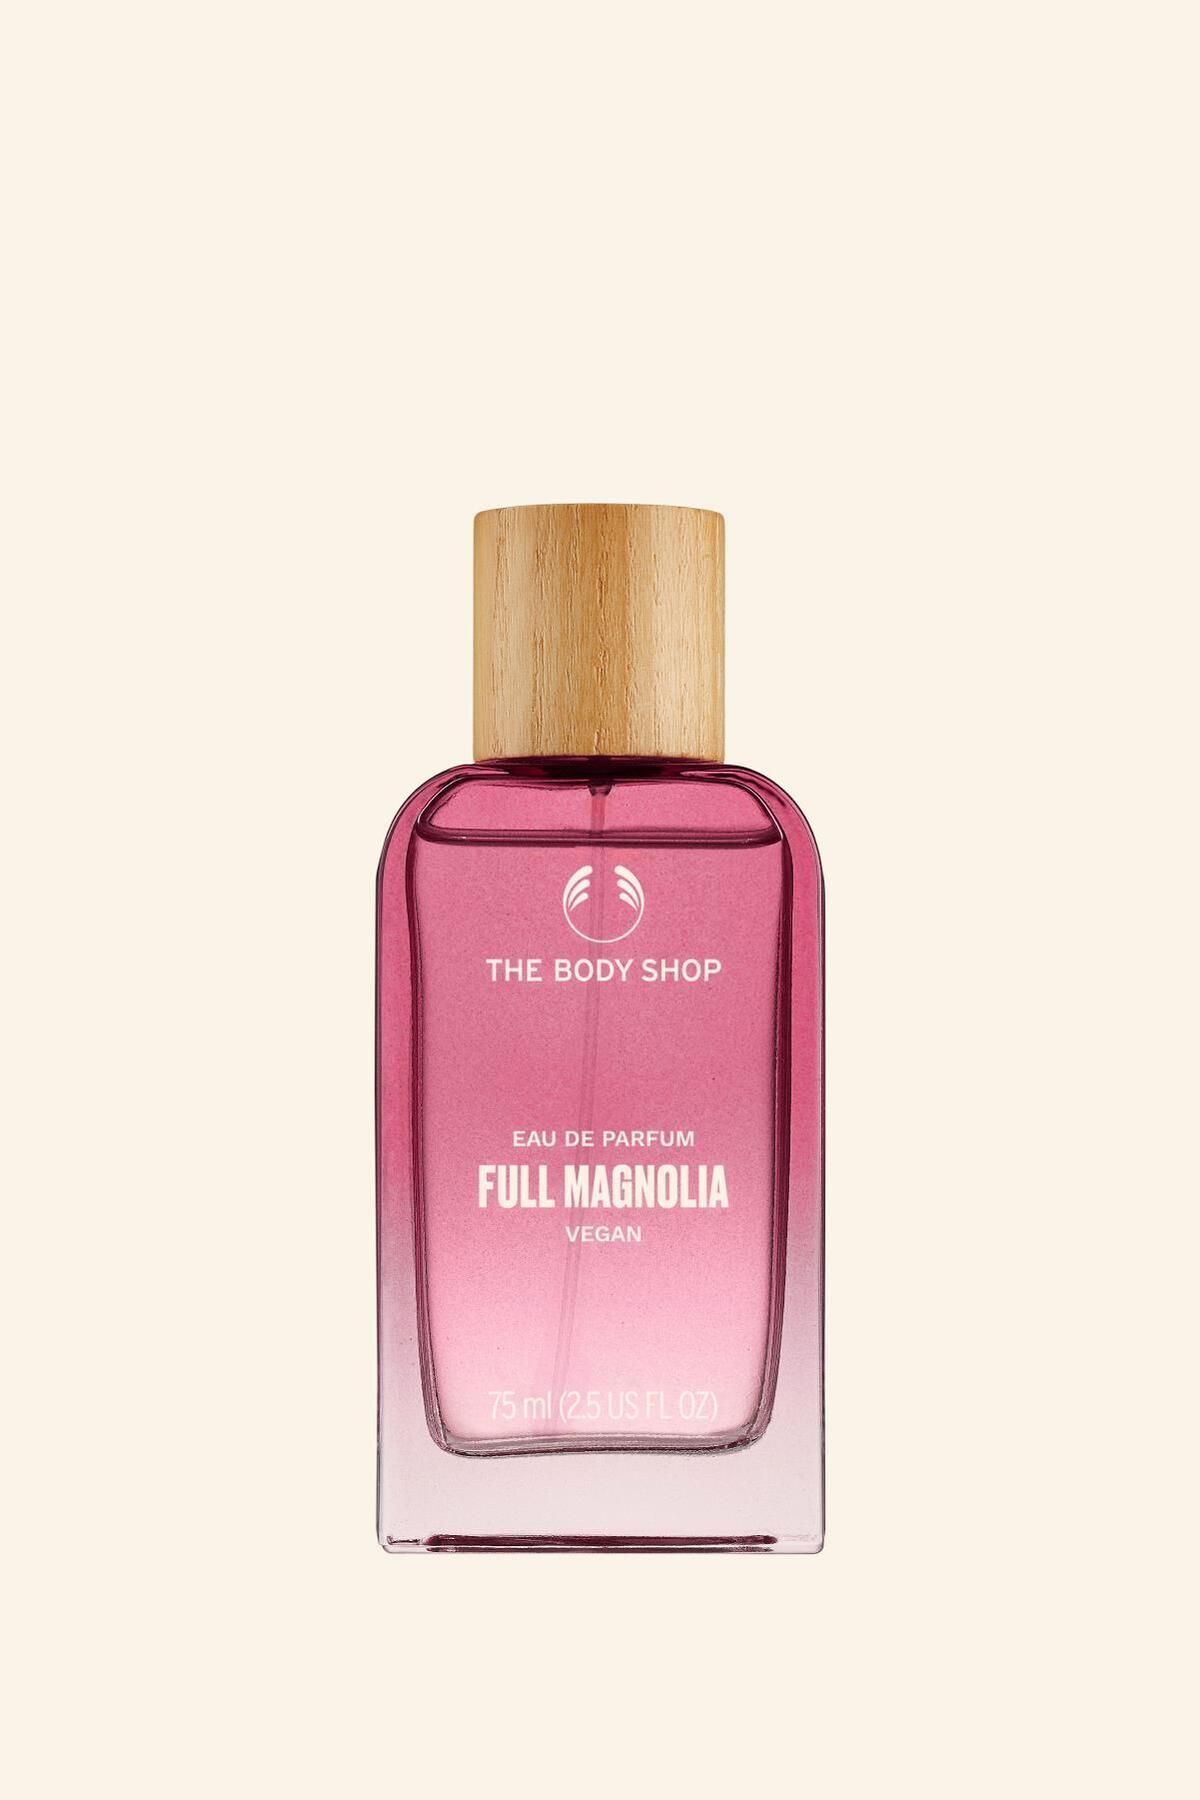 THE BODY SHOP Full Magnolia Eau De Parfum 75 ml